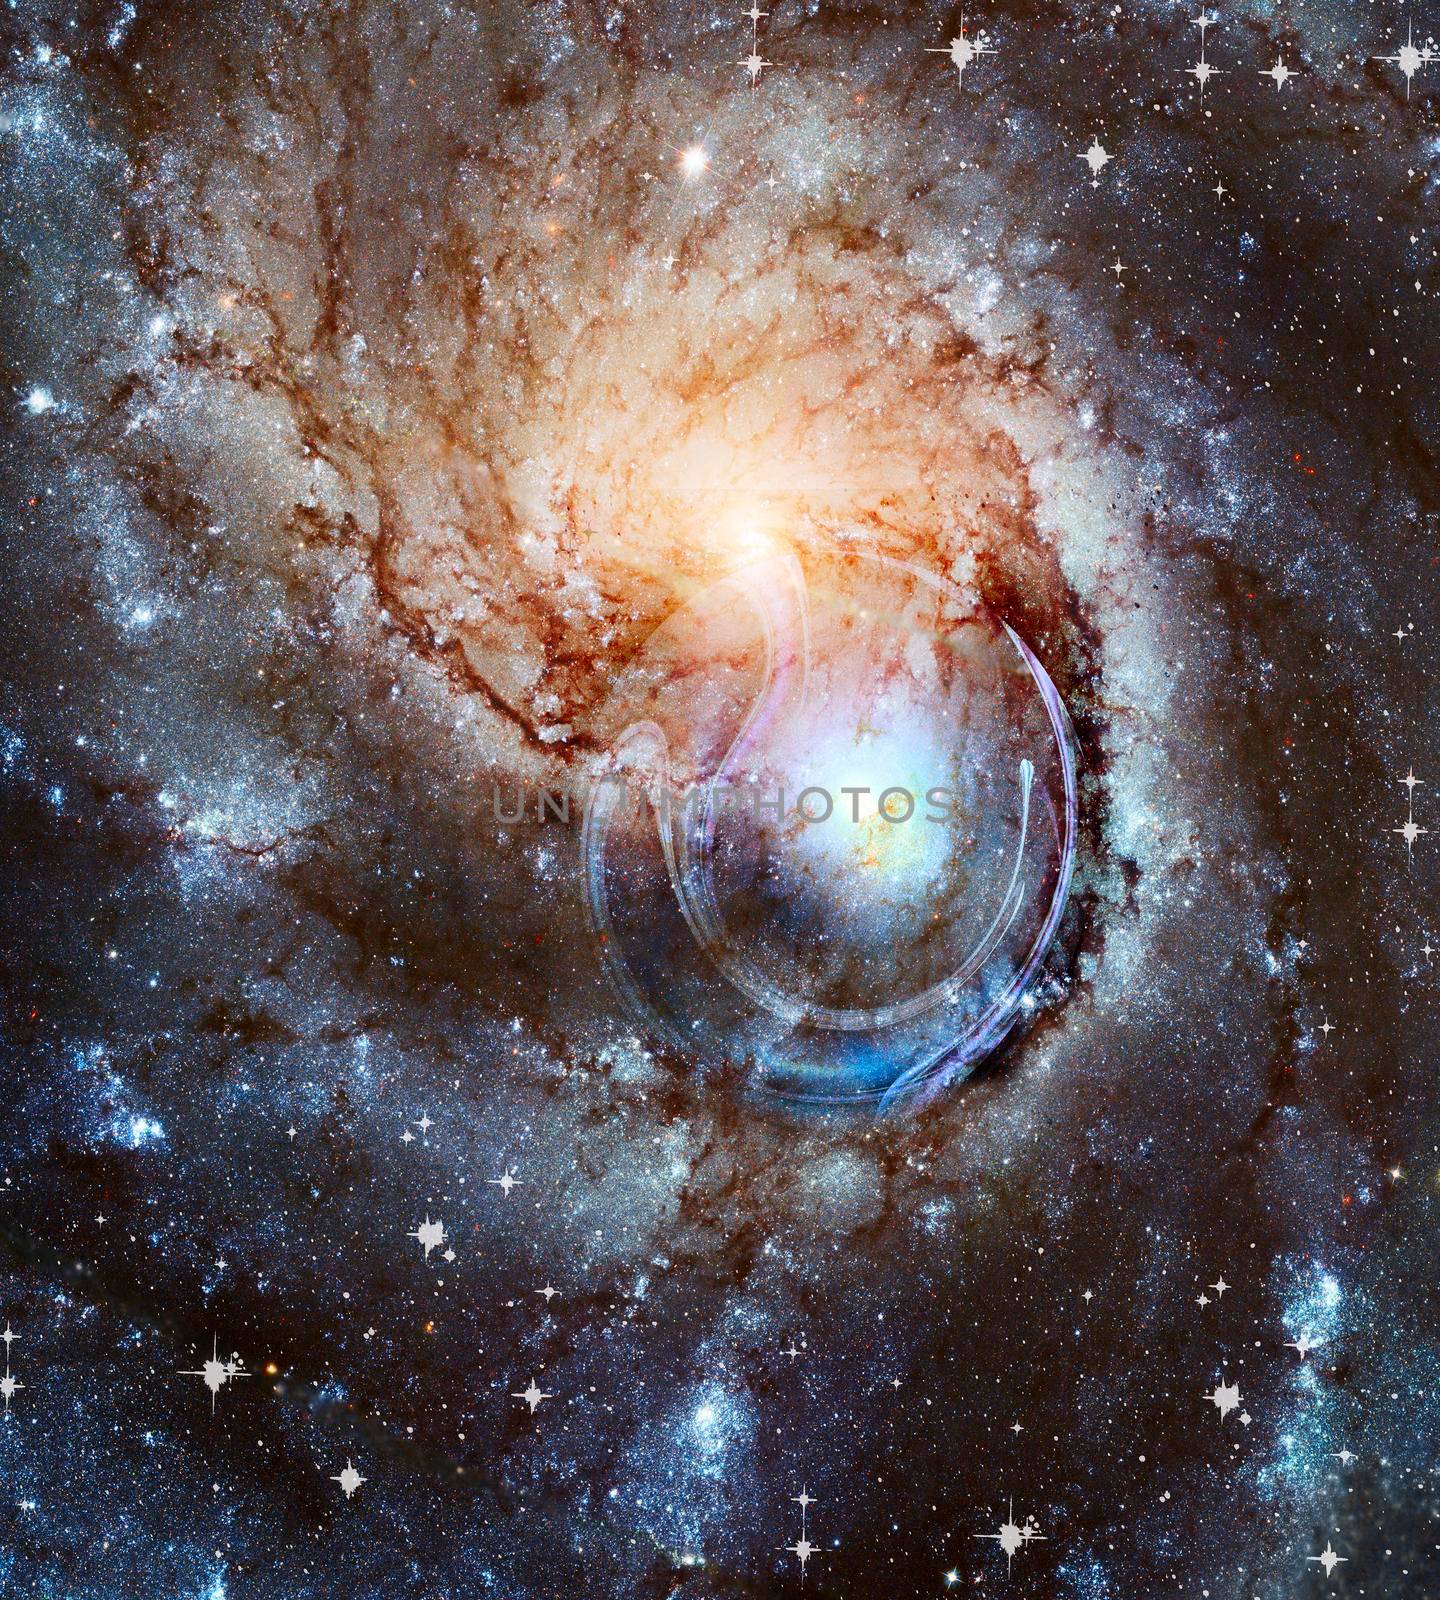 A spiral star galaxy in the Universe. by georgina198